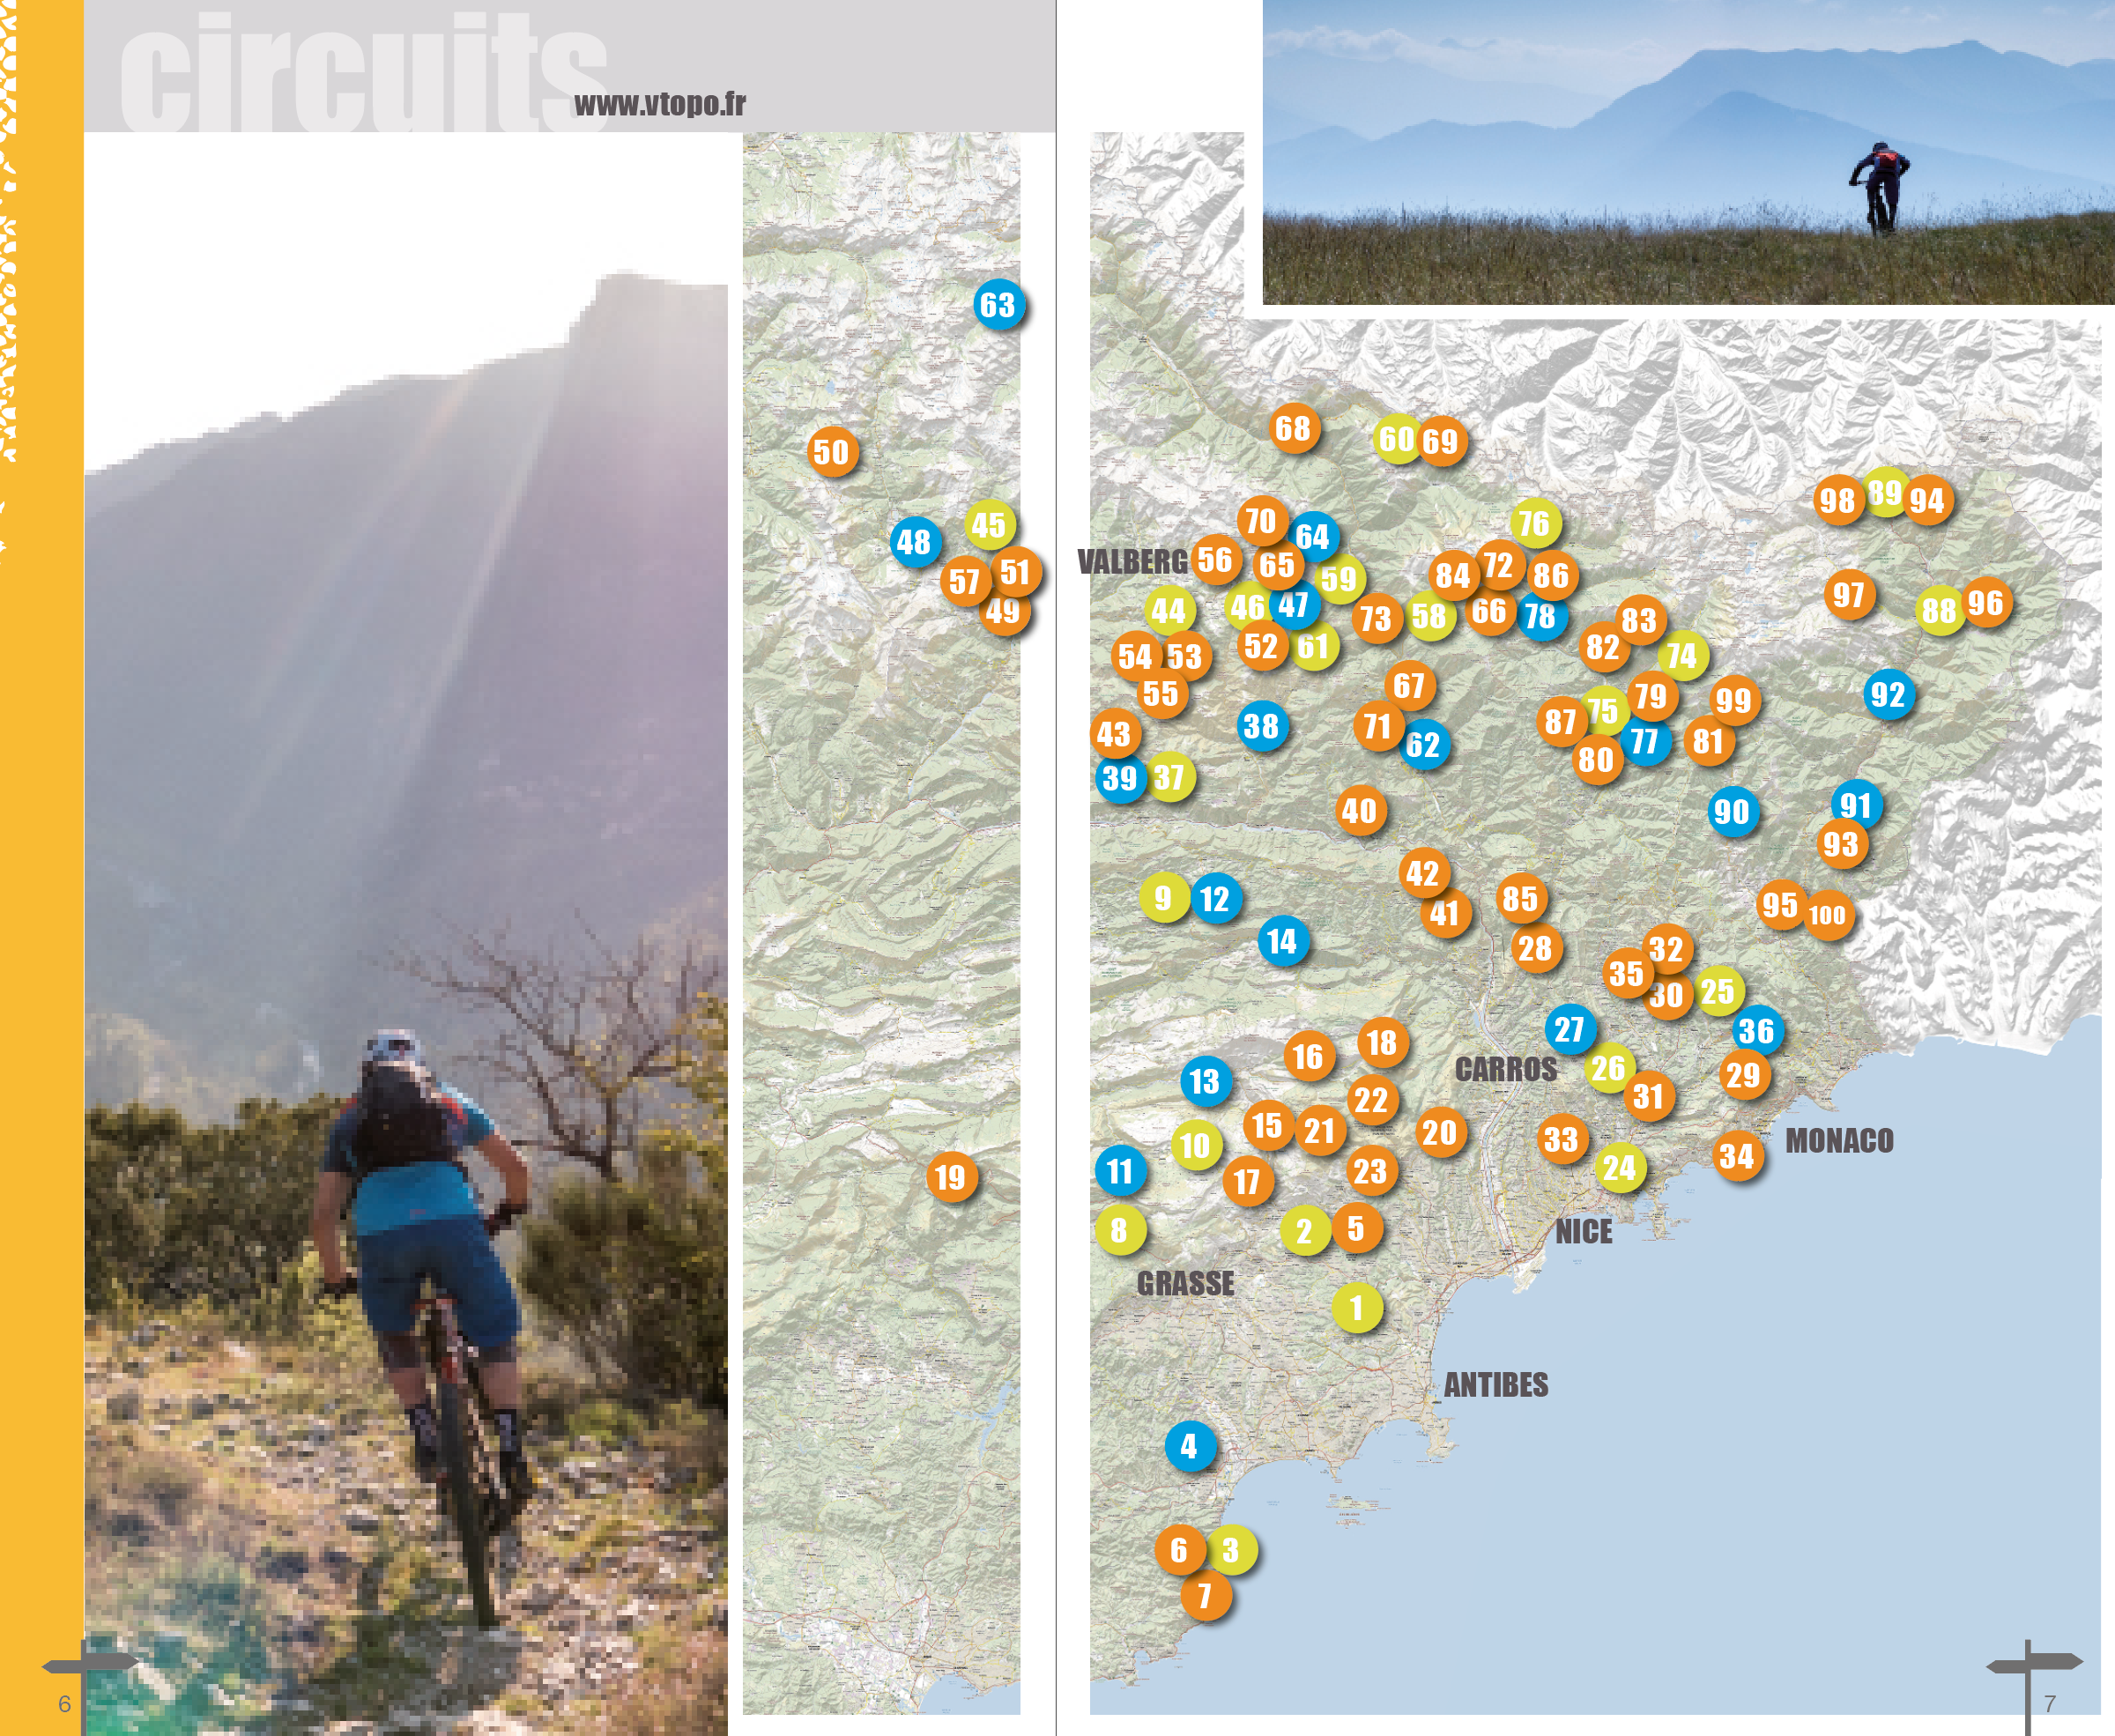 VTOPO mountain biking Alpes-Maritimes - 3rd edition